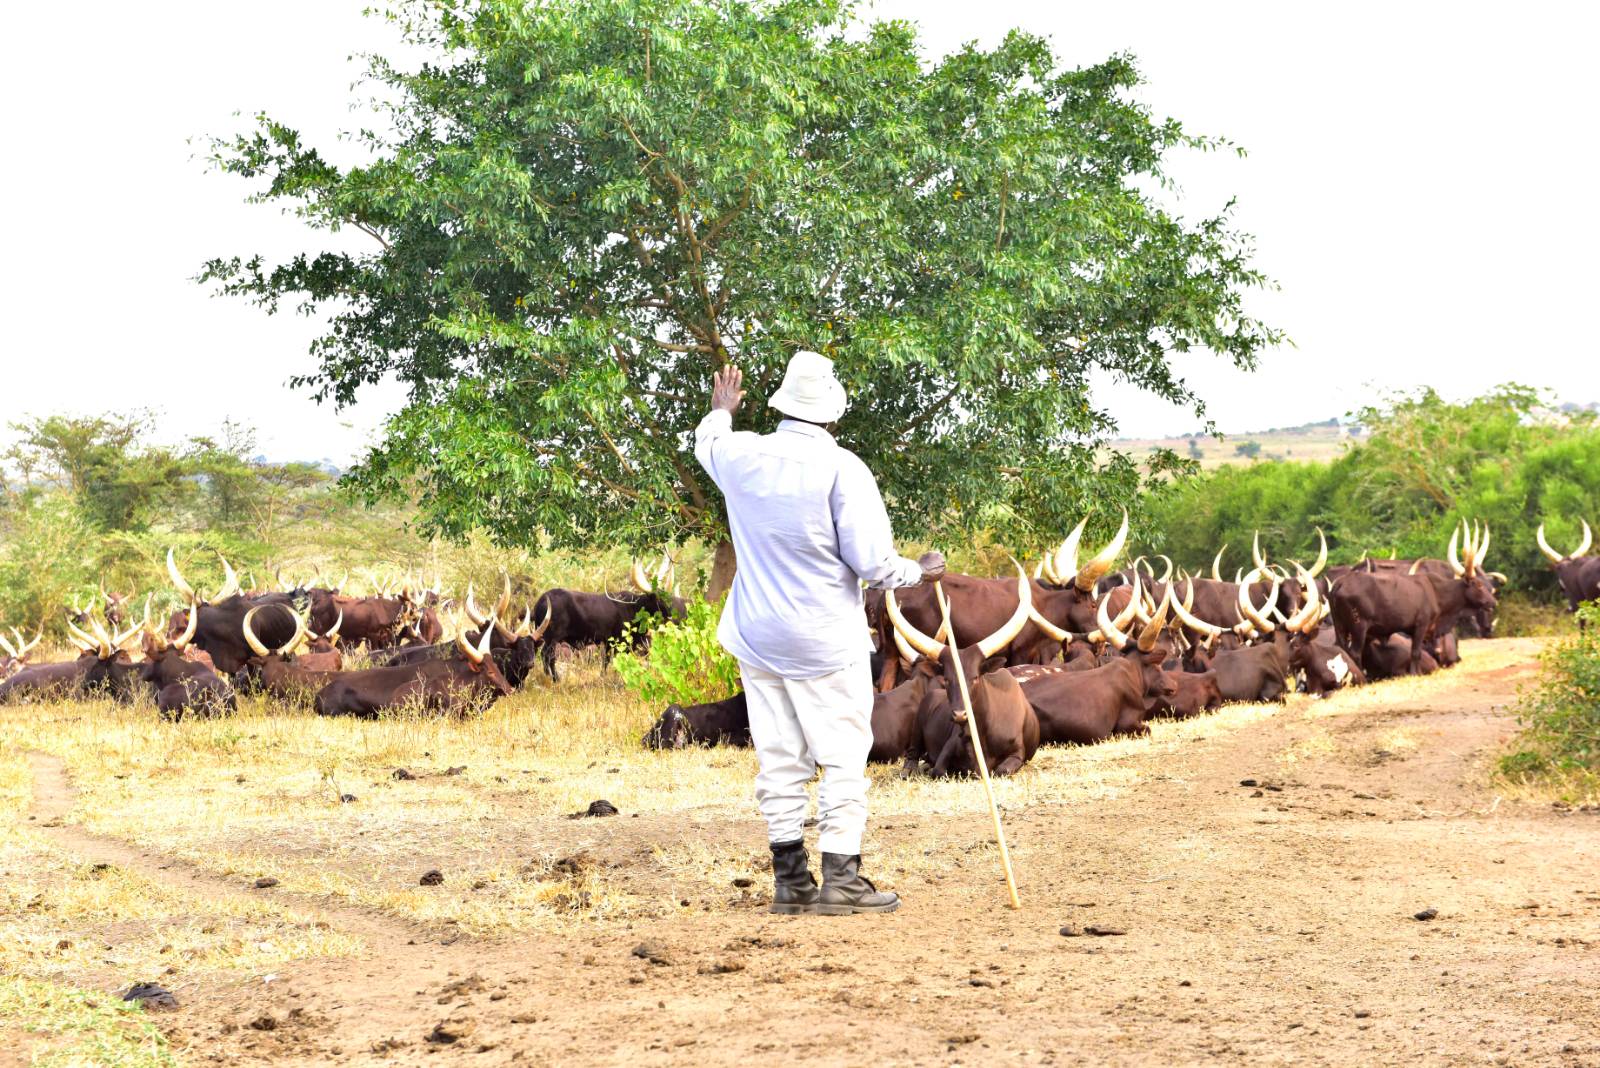 President Museveni at the farm